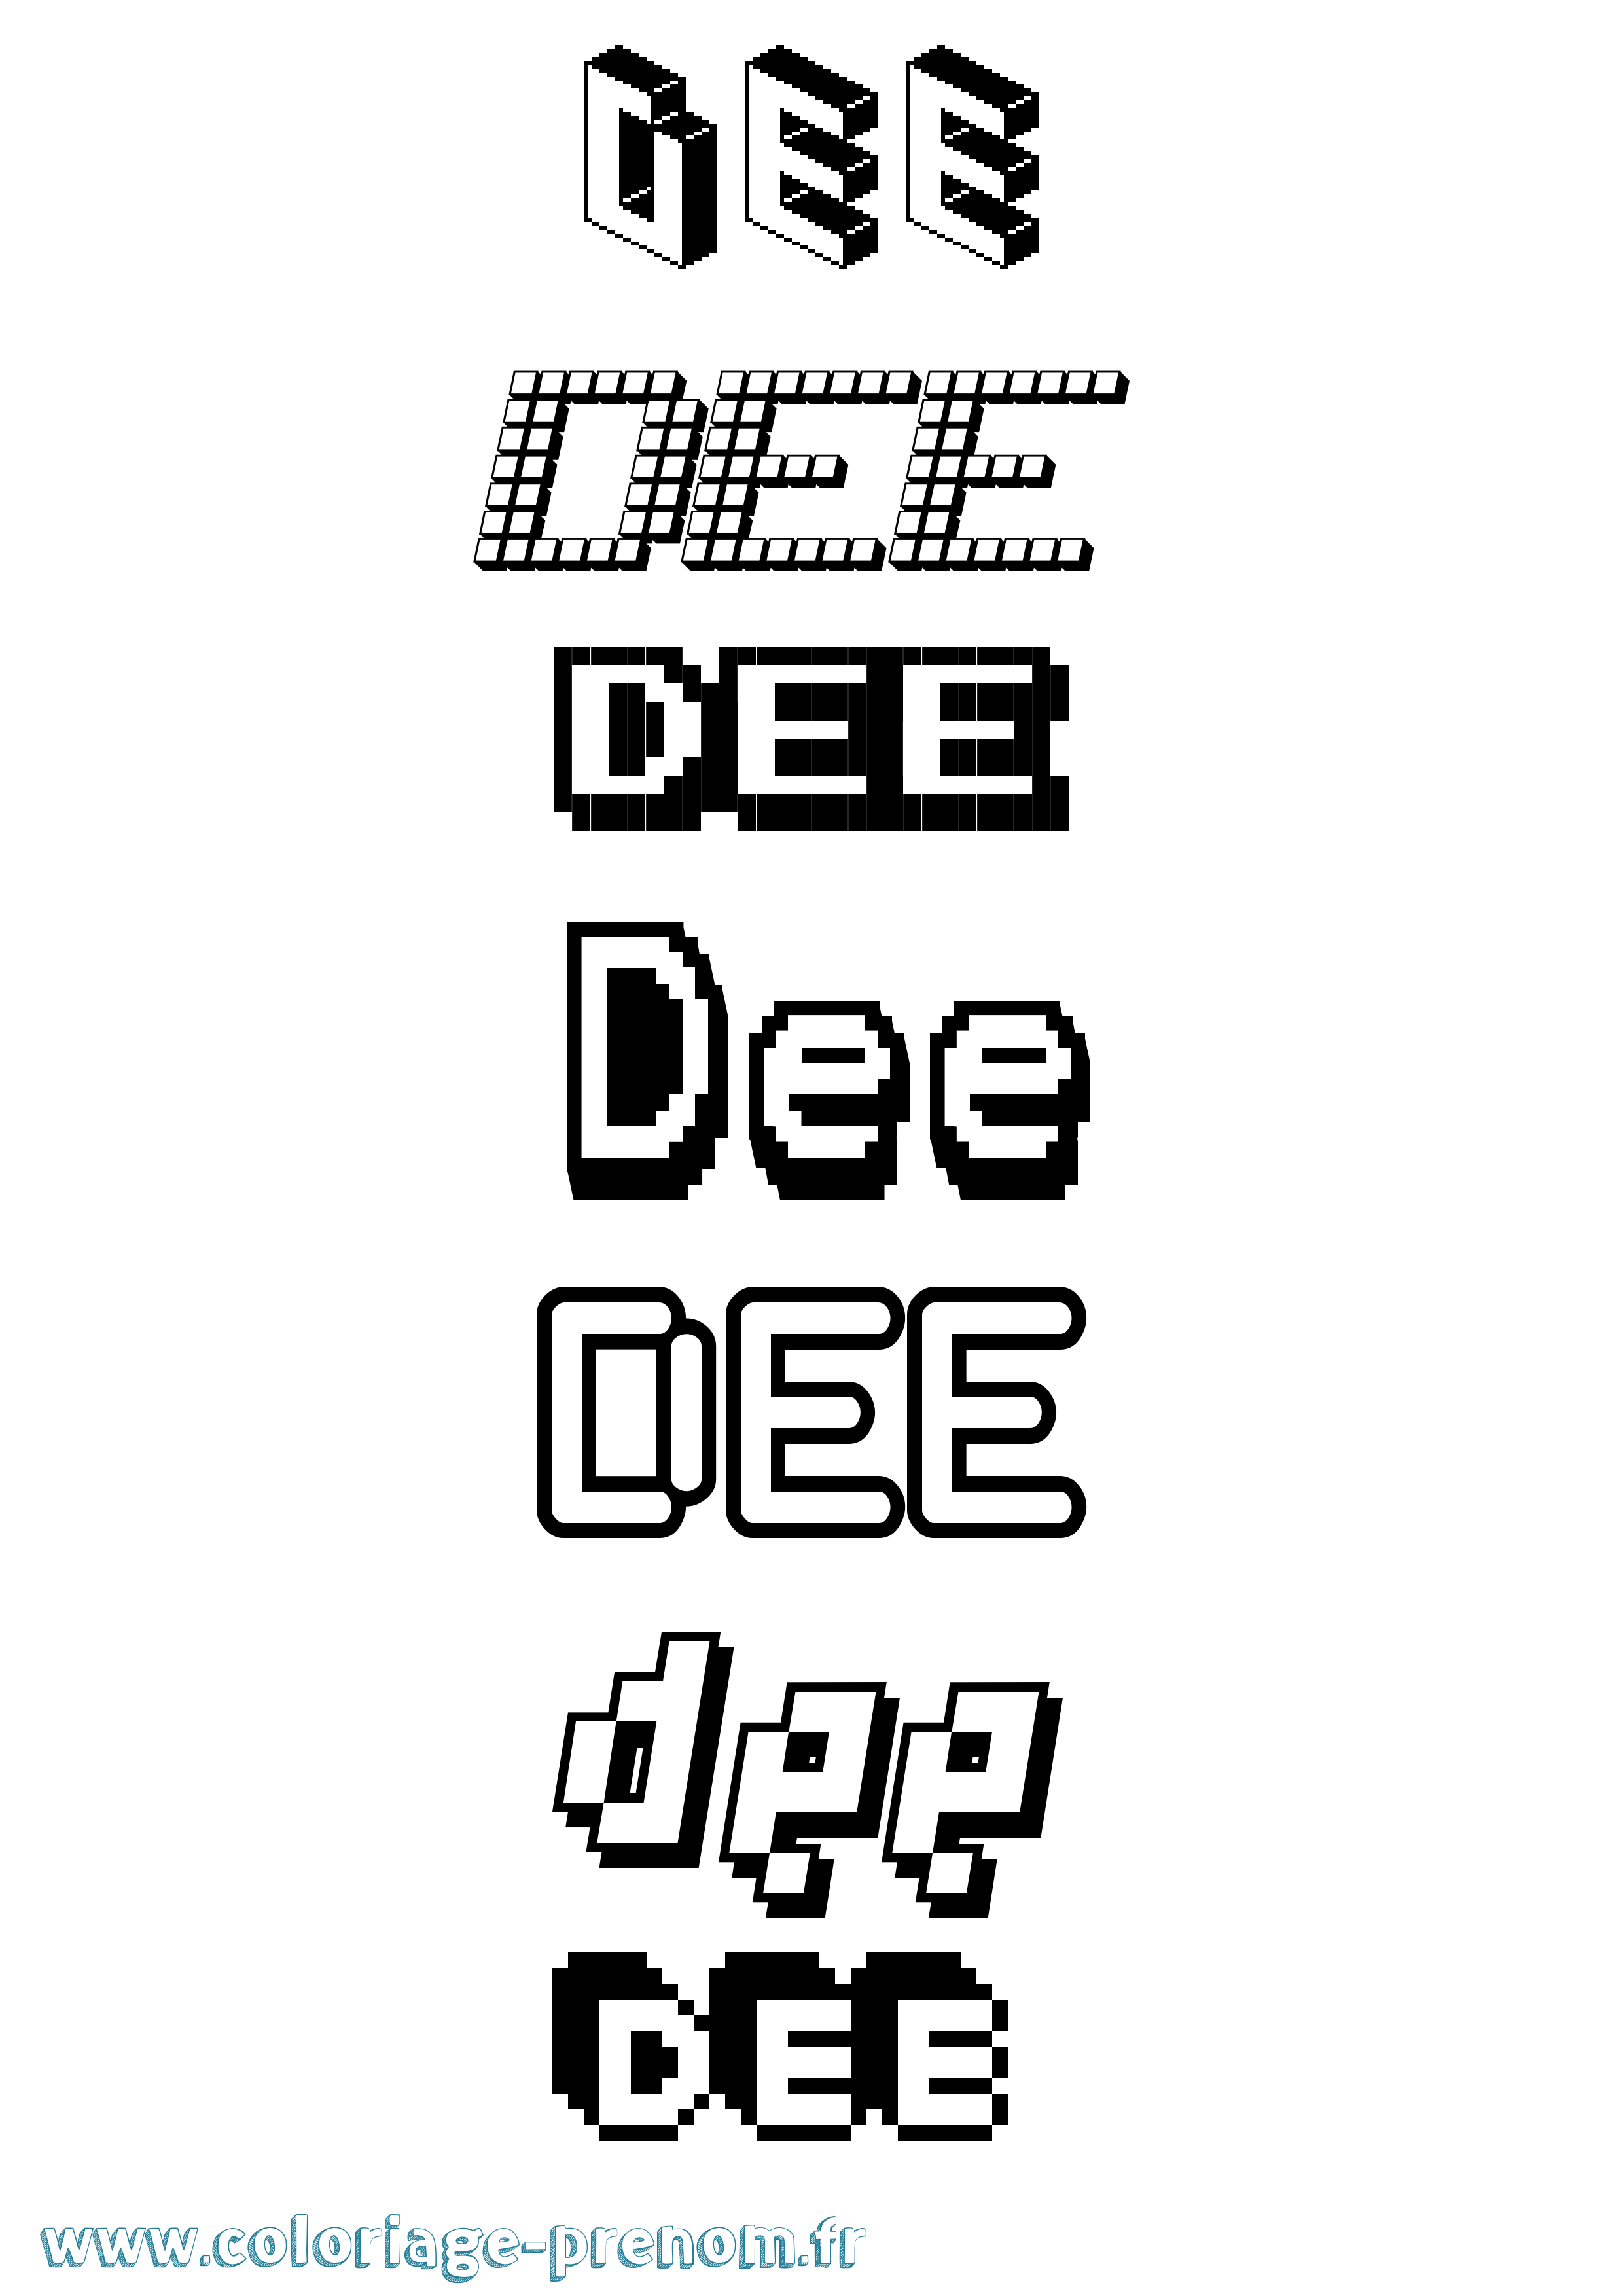 Coloriage prénom Dee Pixel